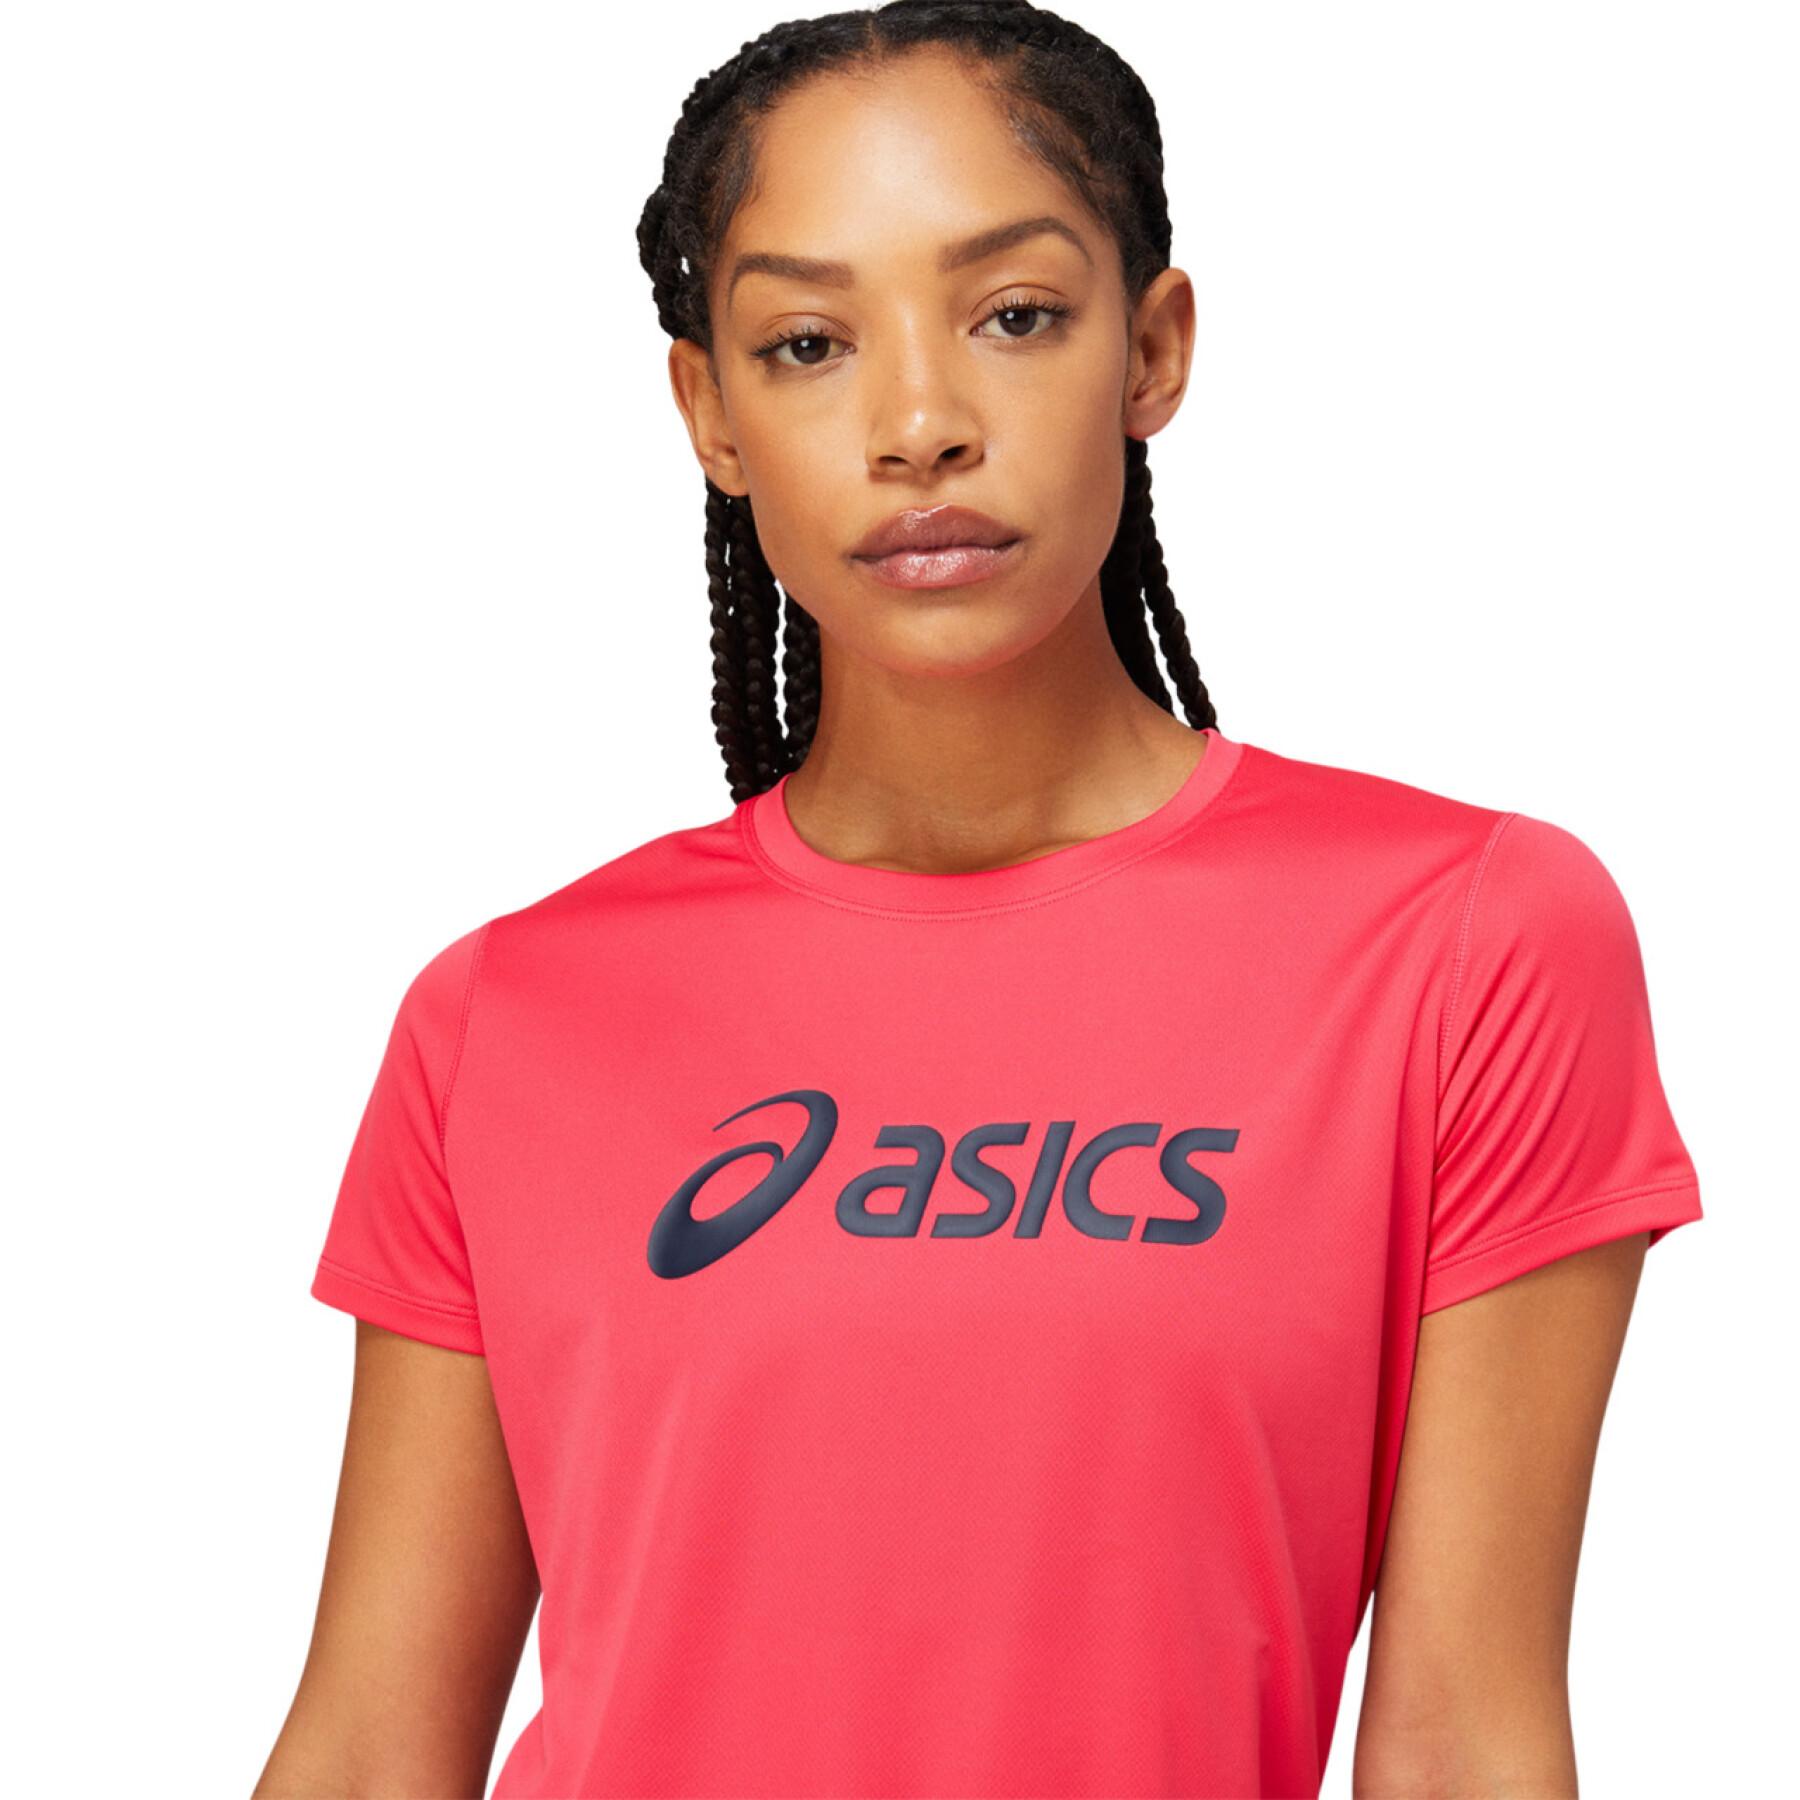 Dames-T-shirt Asics Core